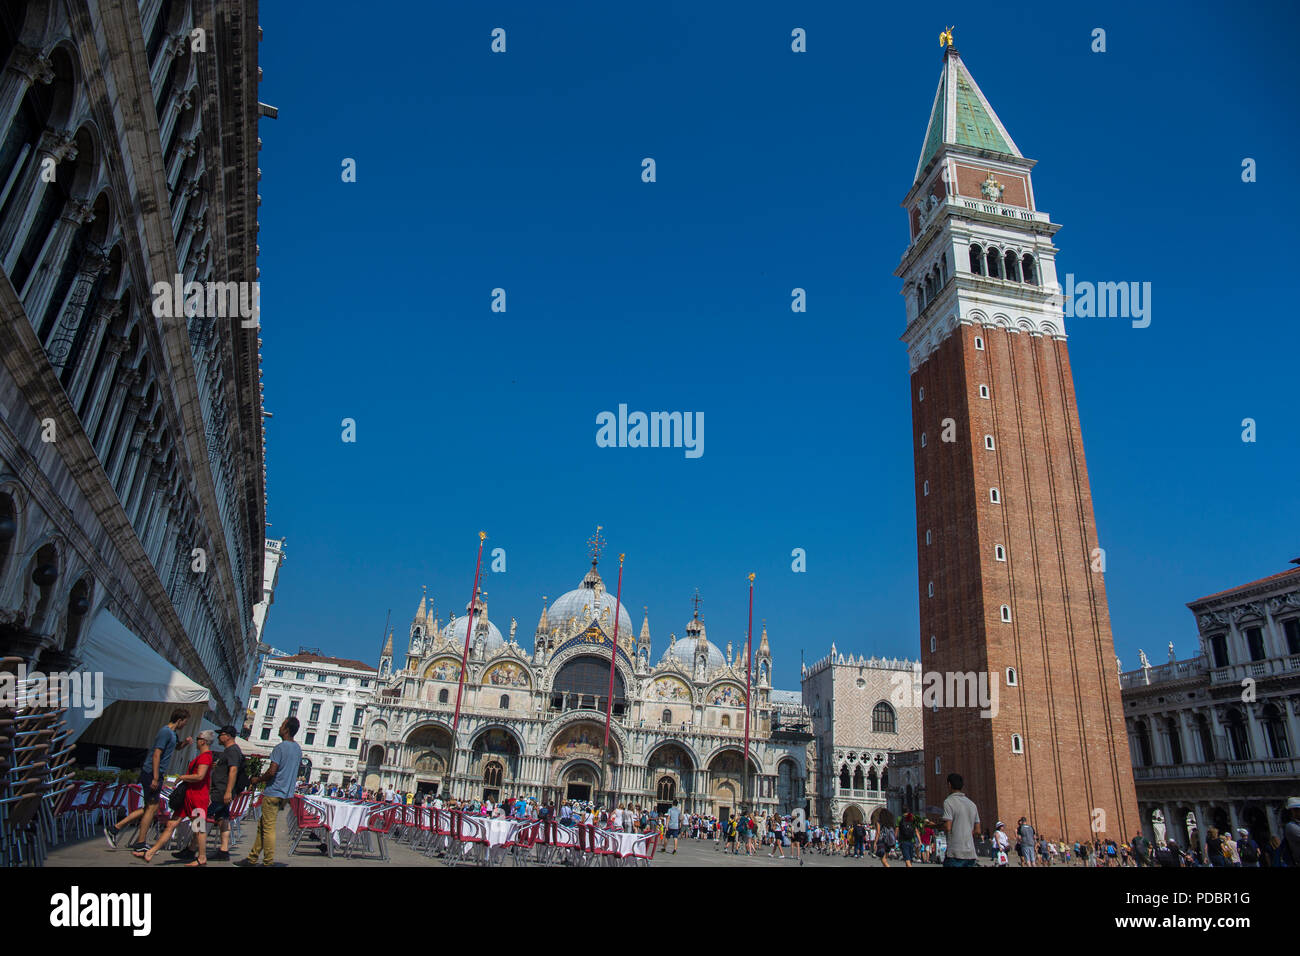 St. Mark's square in Venice - Piazza San Marco in Venice Stock Photo